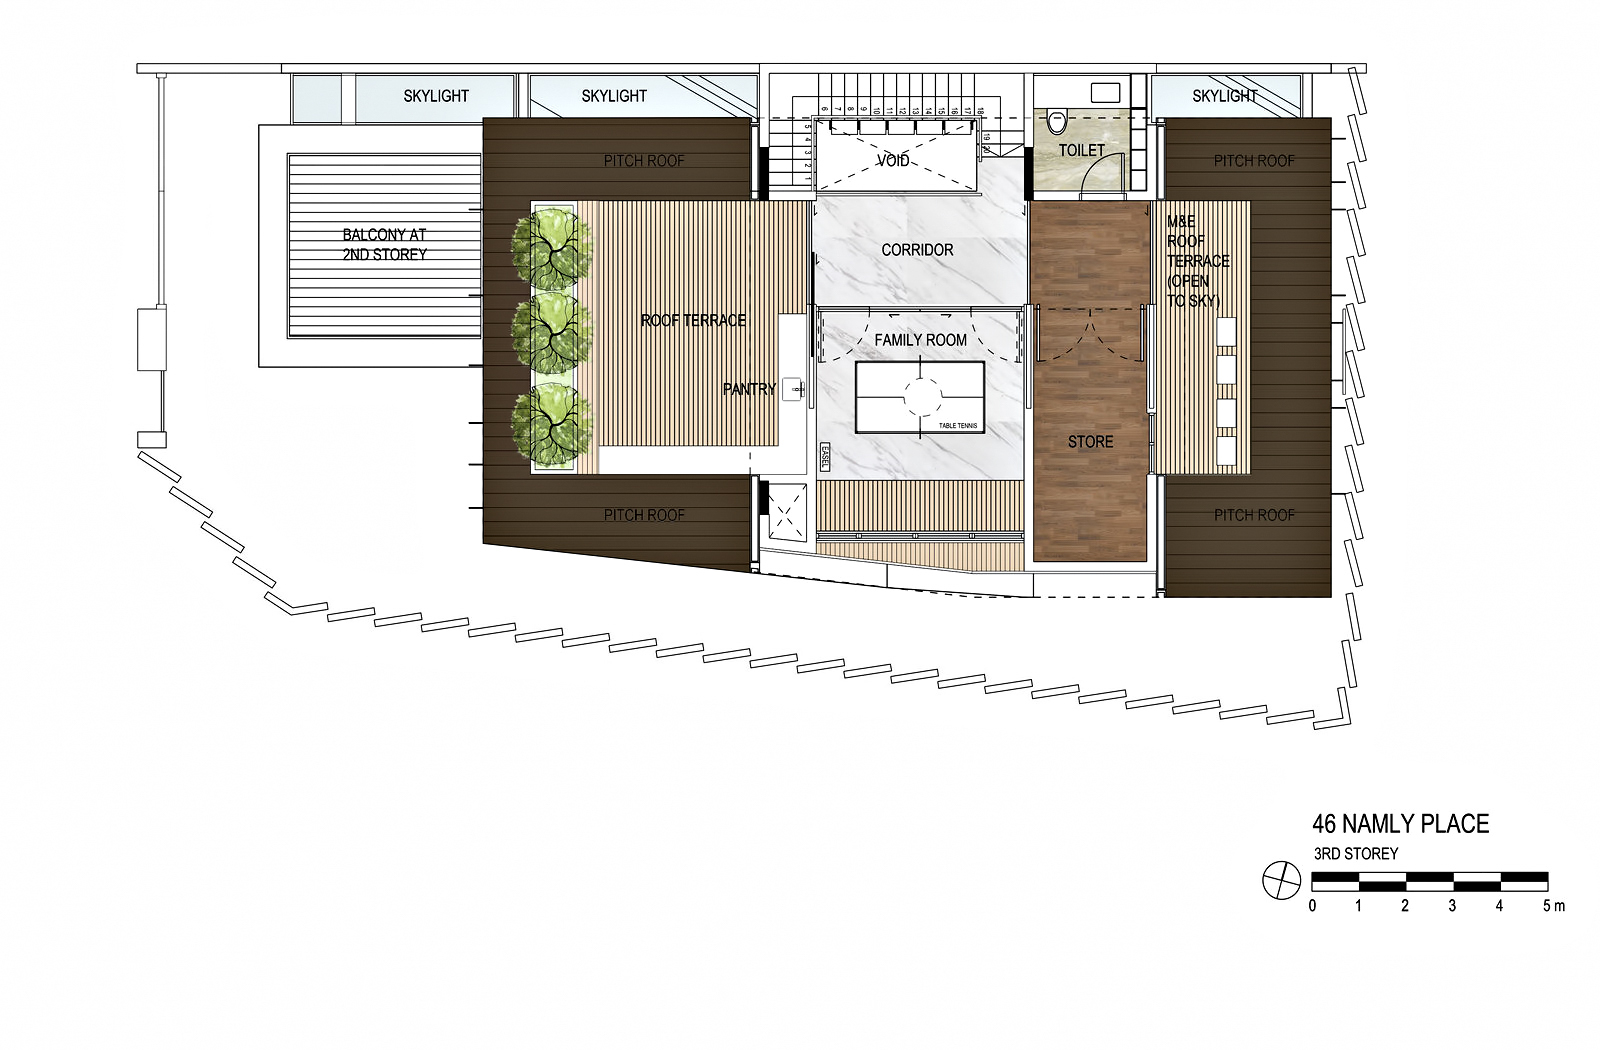 Third Floor Plan - The Loft House Luxury Residence - Namly Place, Singapore